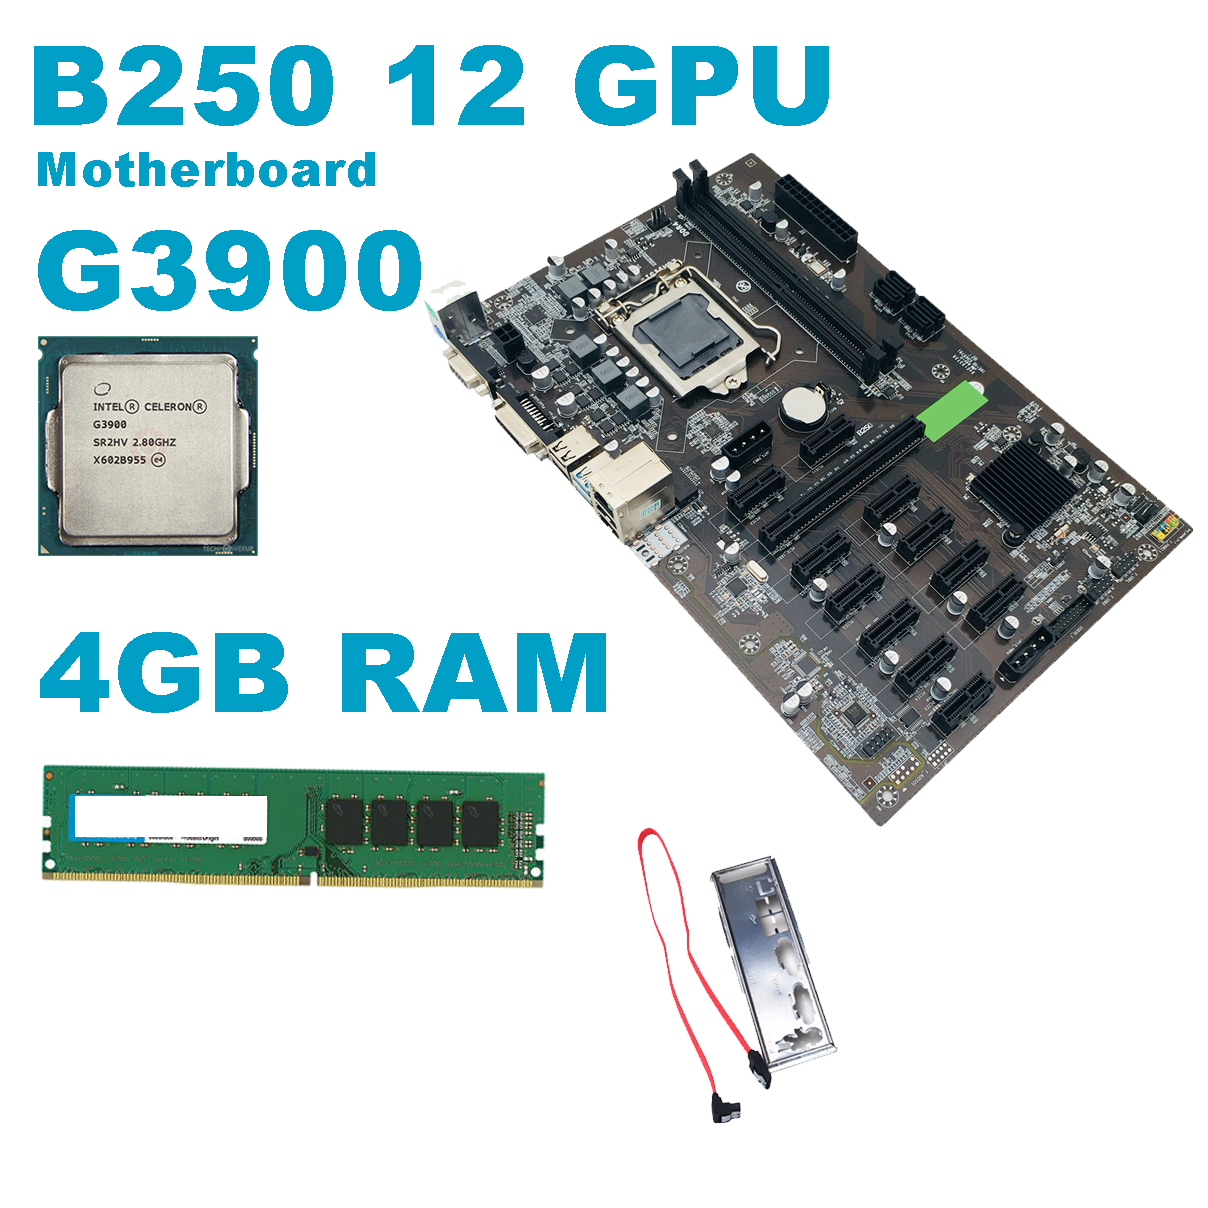 B250 Mining Motherboard with G3900 CPU and 4GB RAM - AndoVolution Australia - GPU Risers - crypto mining - Located: North Lakes, Brisbane, QLD, Australia